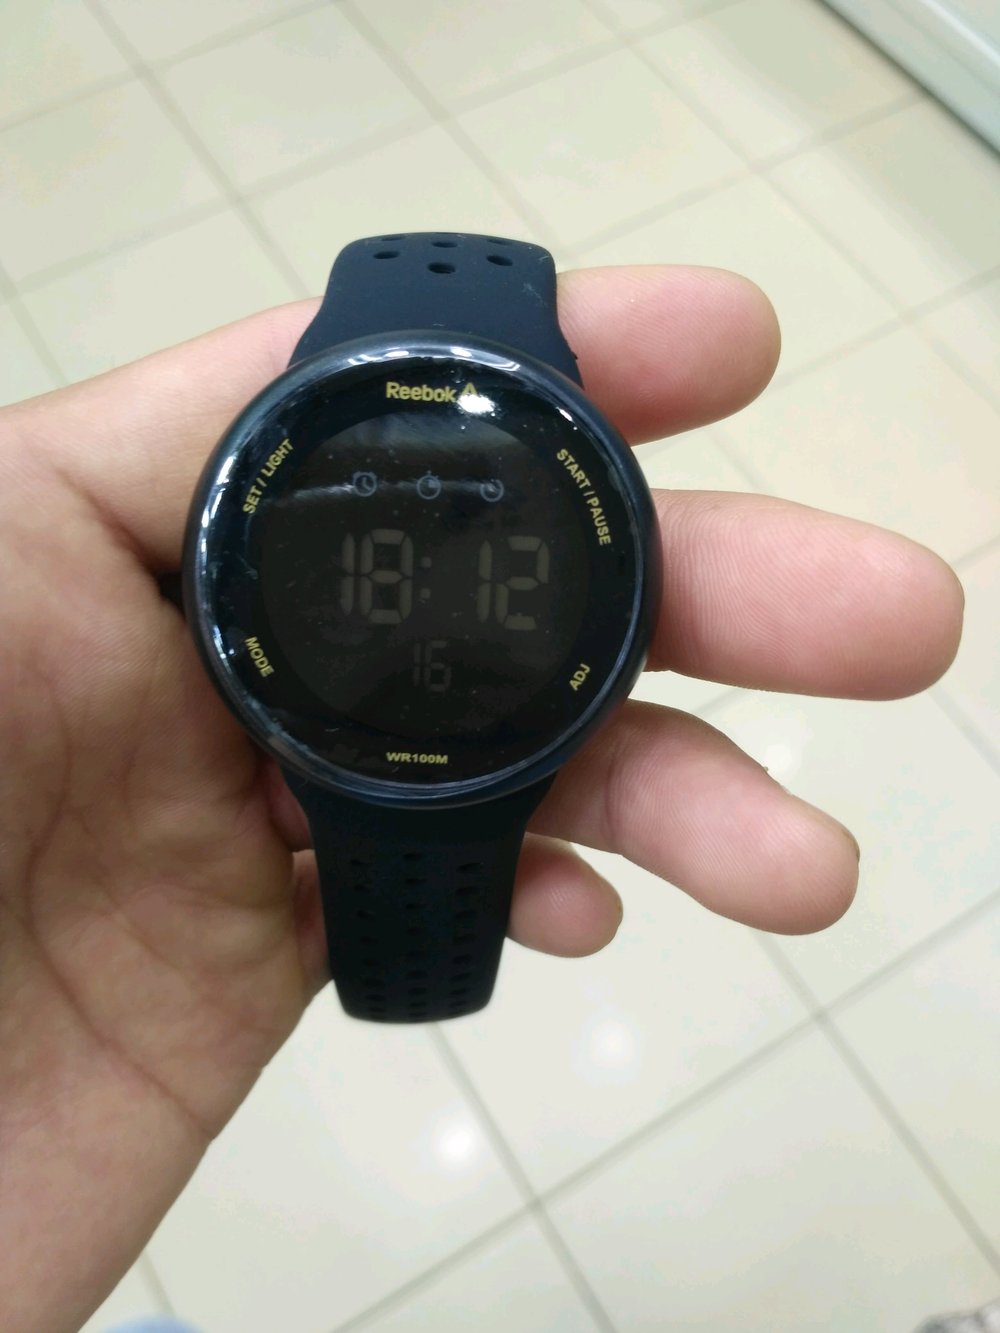 jam tangan reebok original - 61% OFF 